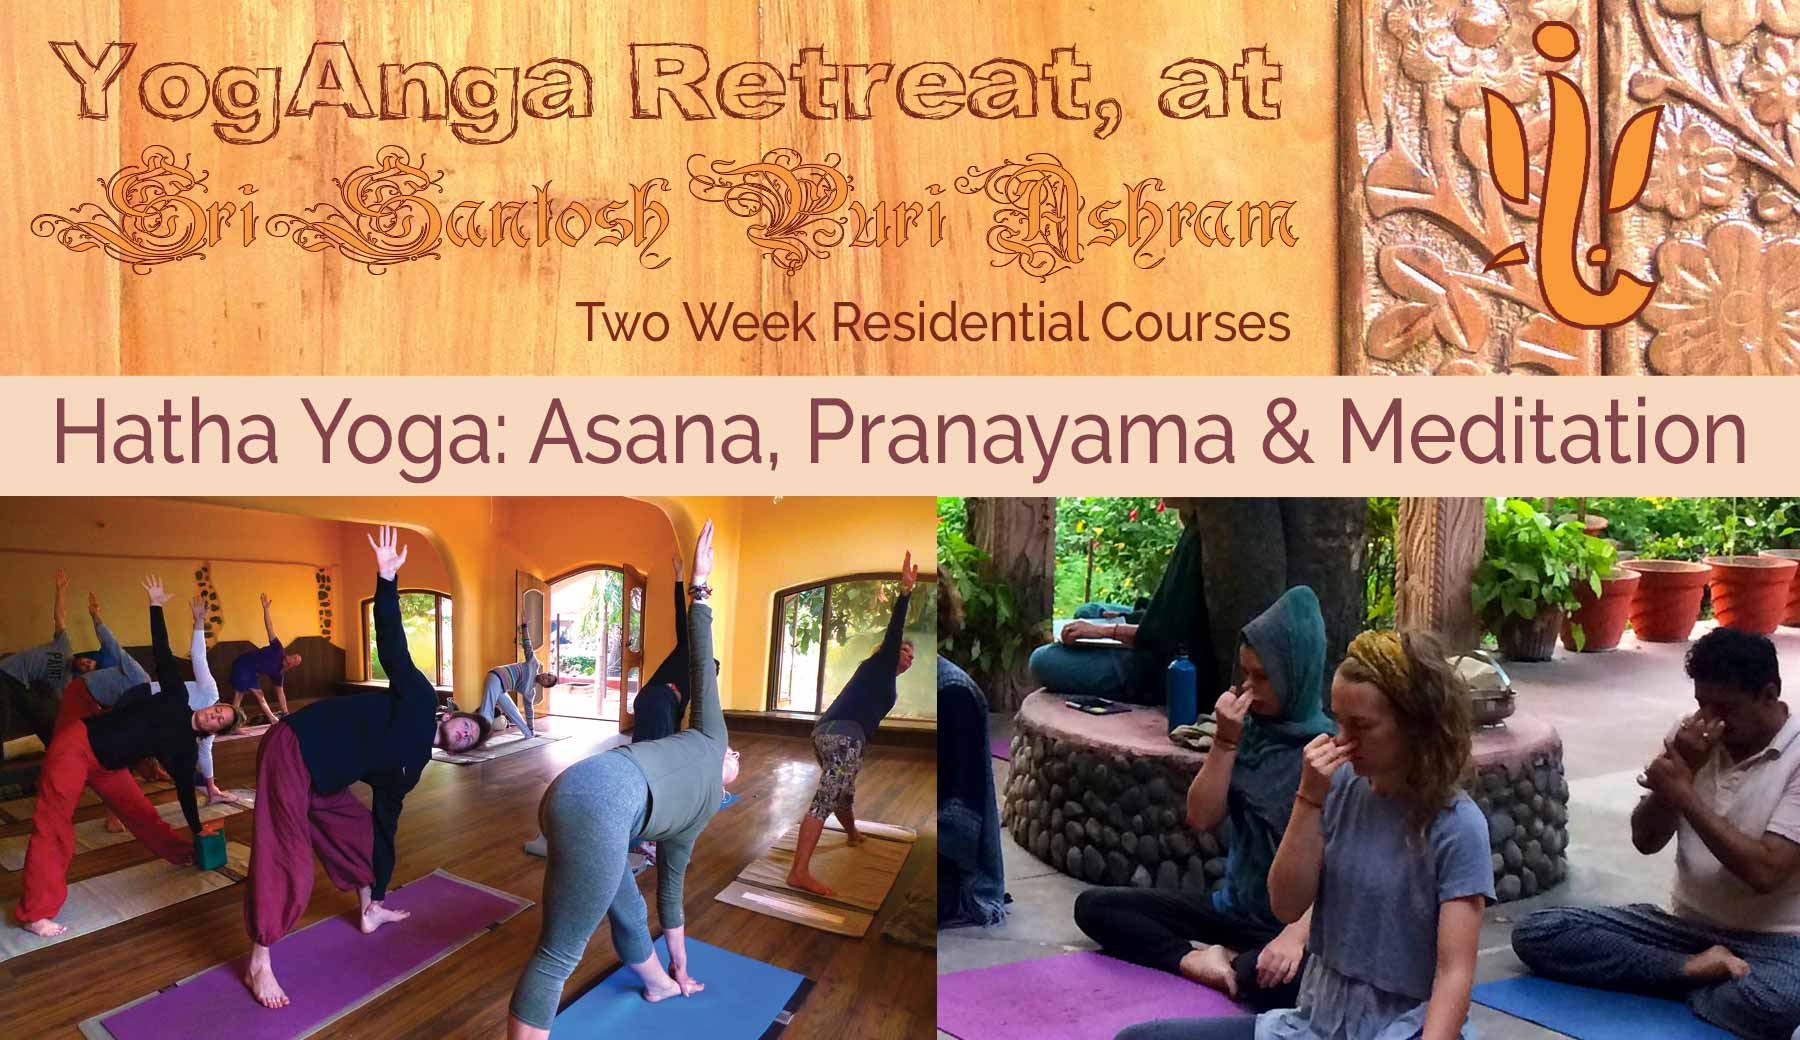 yoganga.org - YogAnga Retreat at Sri Santosh Puri Ashram - Hatha Yoga, Asana, Pranayama & Meditation two week Residential Course, Mandakini Puri